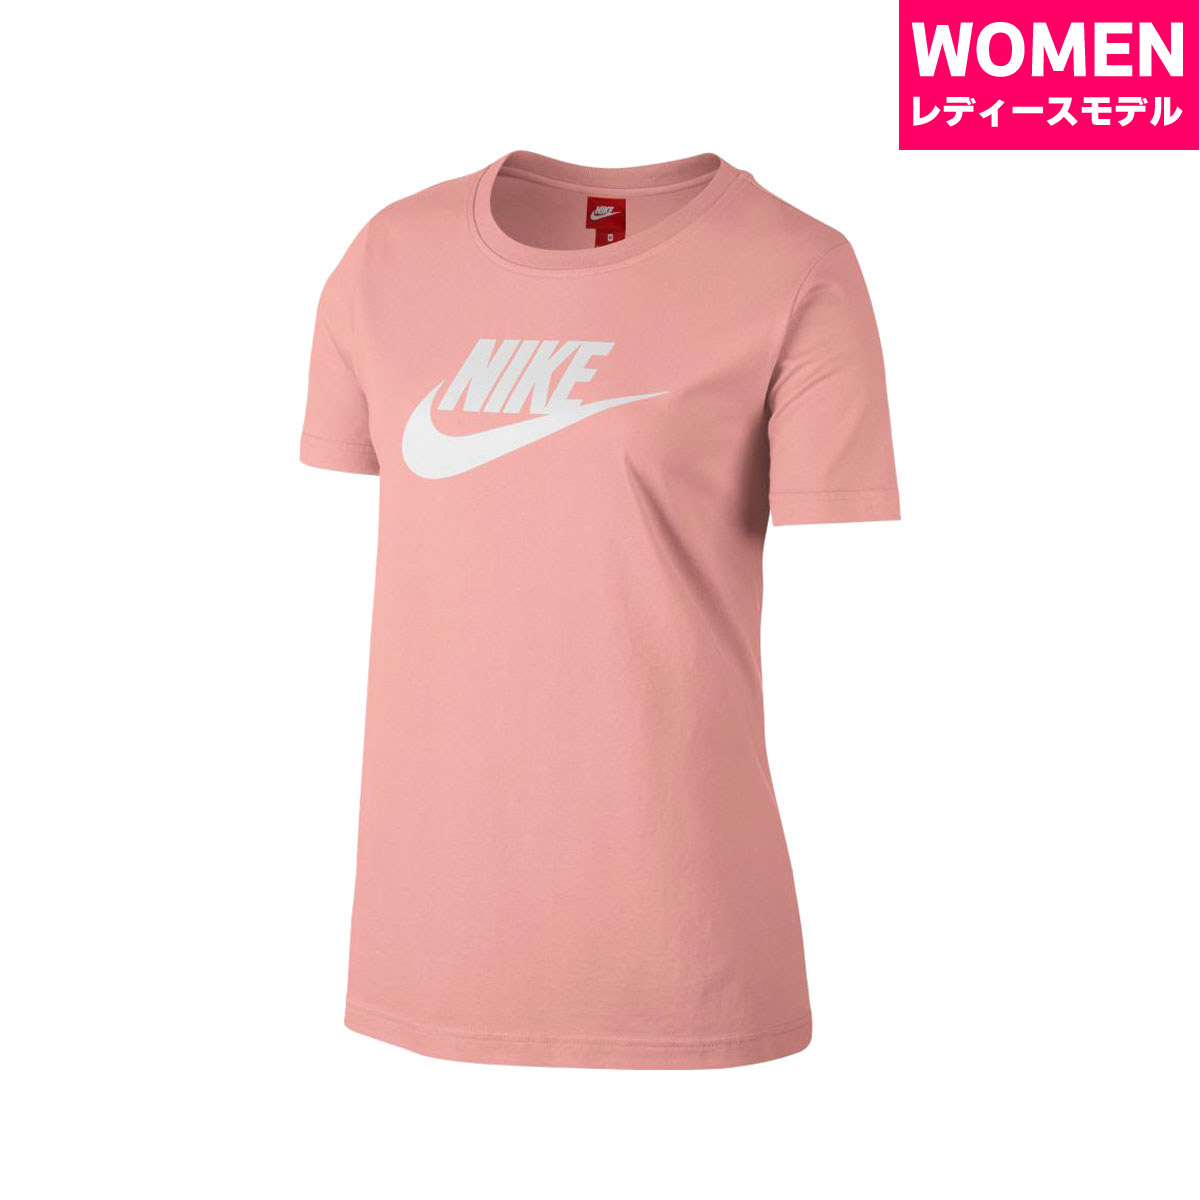 nike pink shirt womens